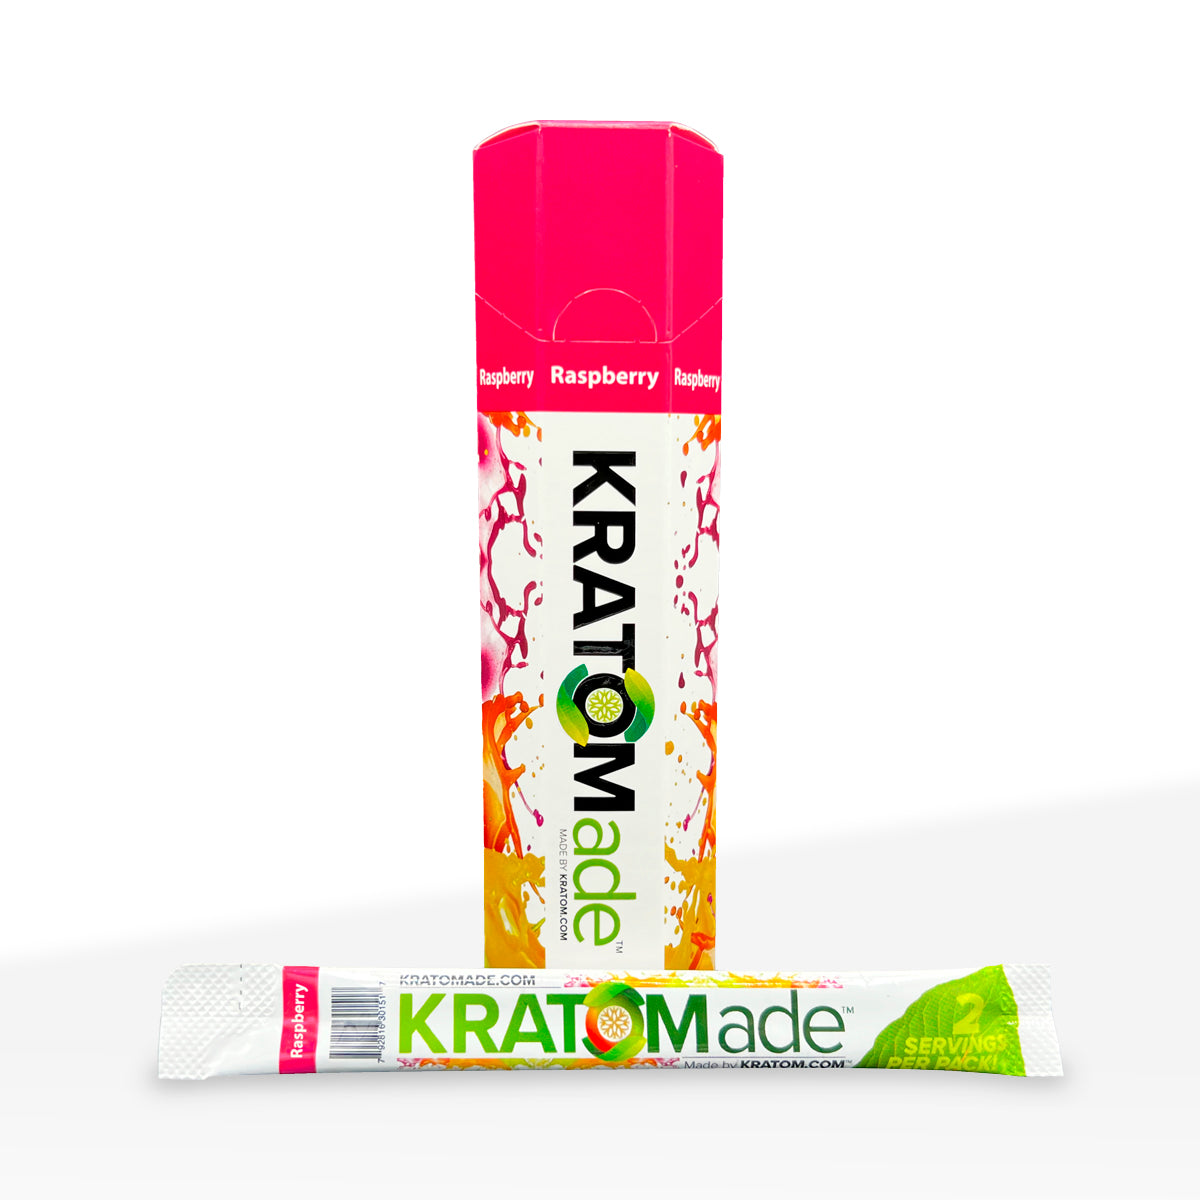 KratomADE Kratom 100mg Powder in Raspberry